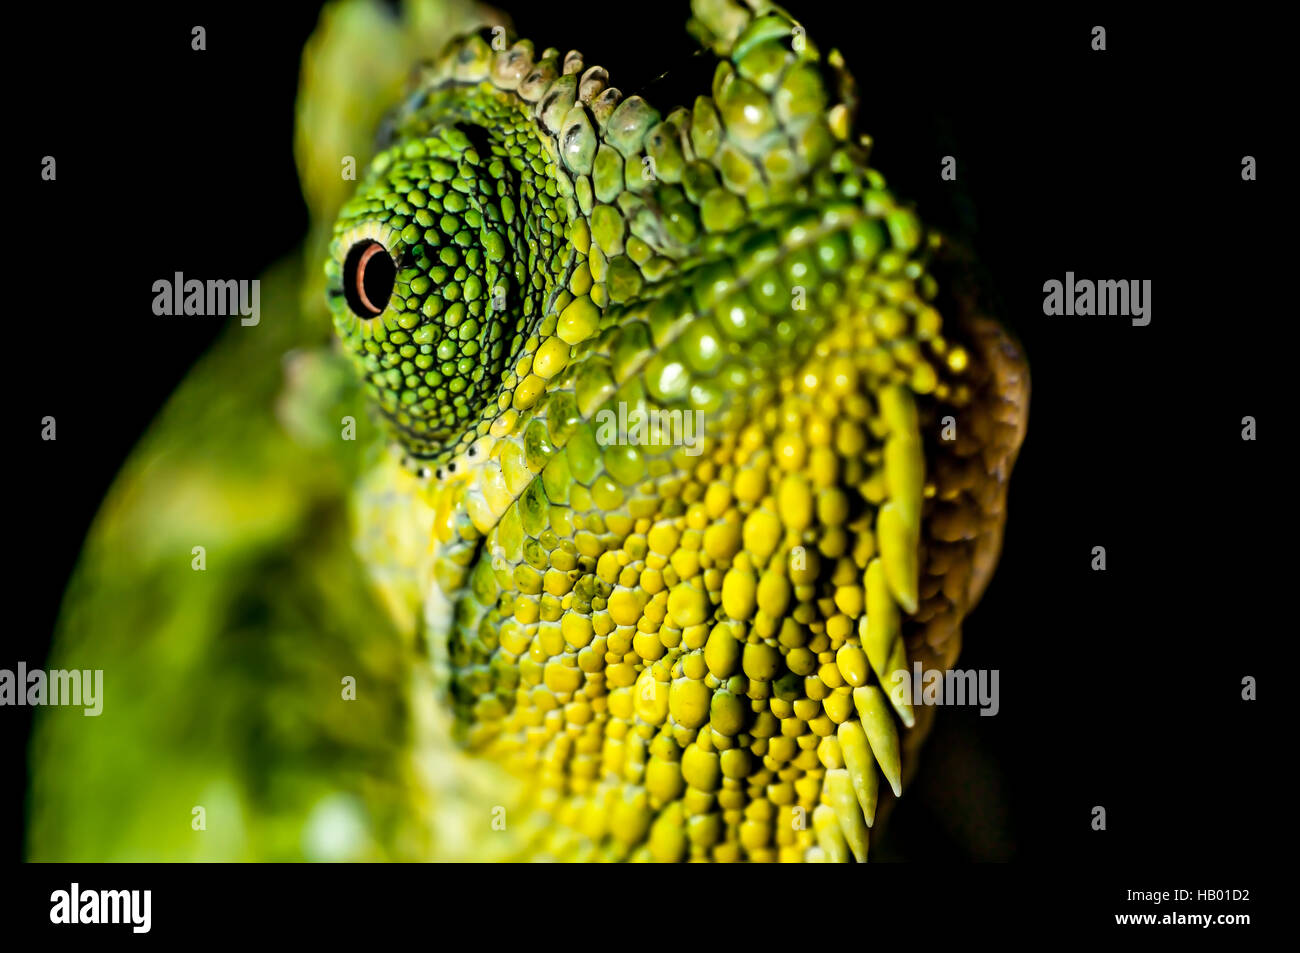 Eye of a Chameleon Stock Photo